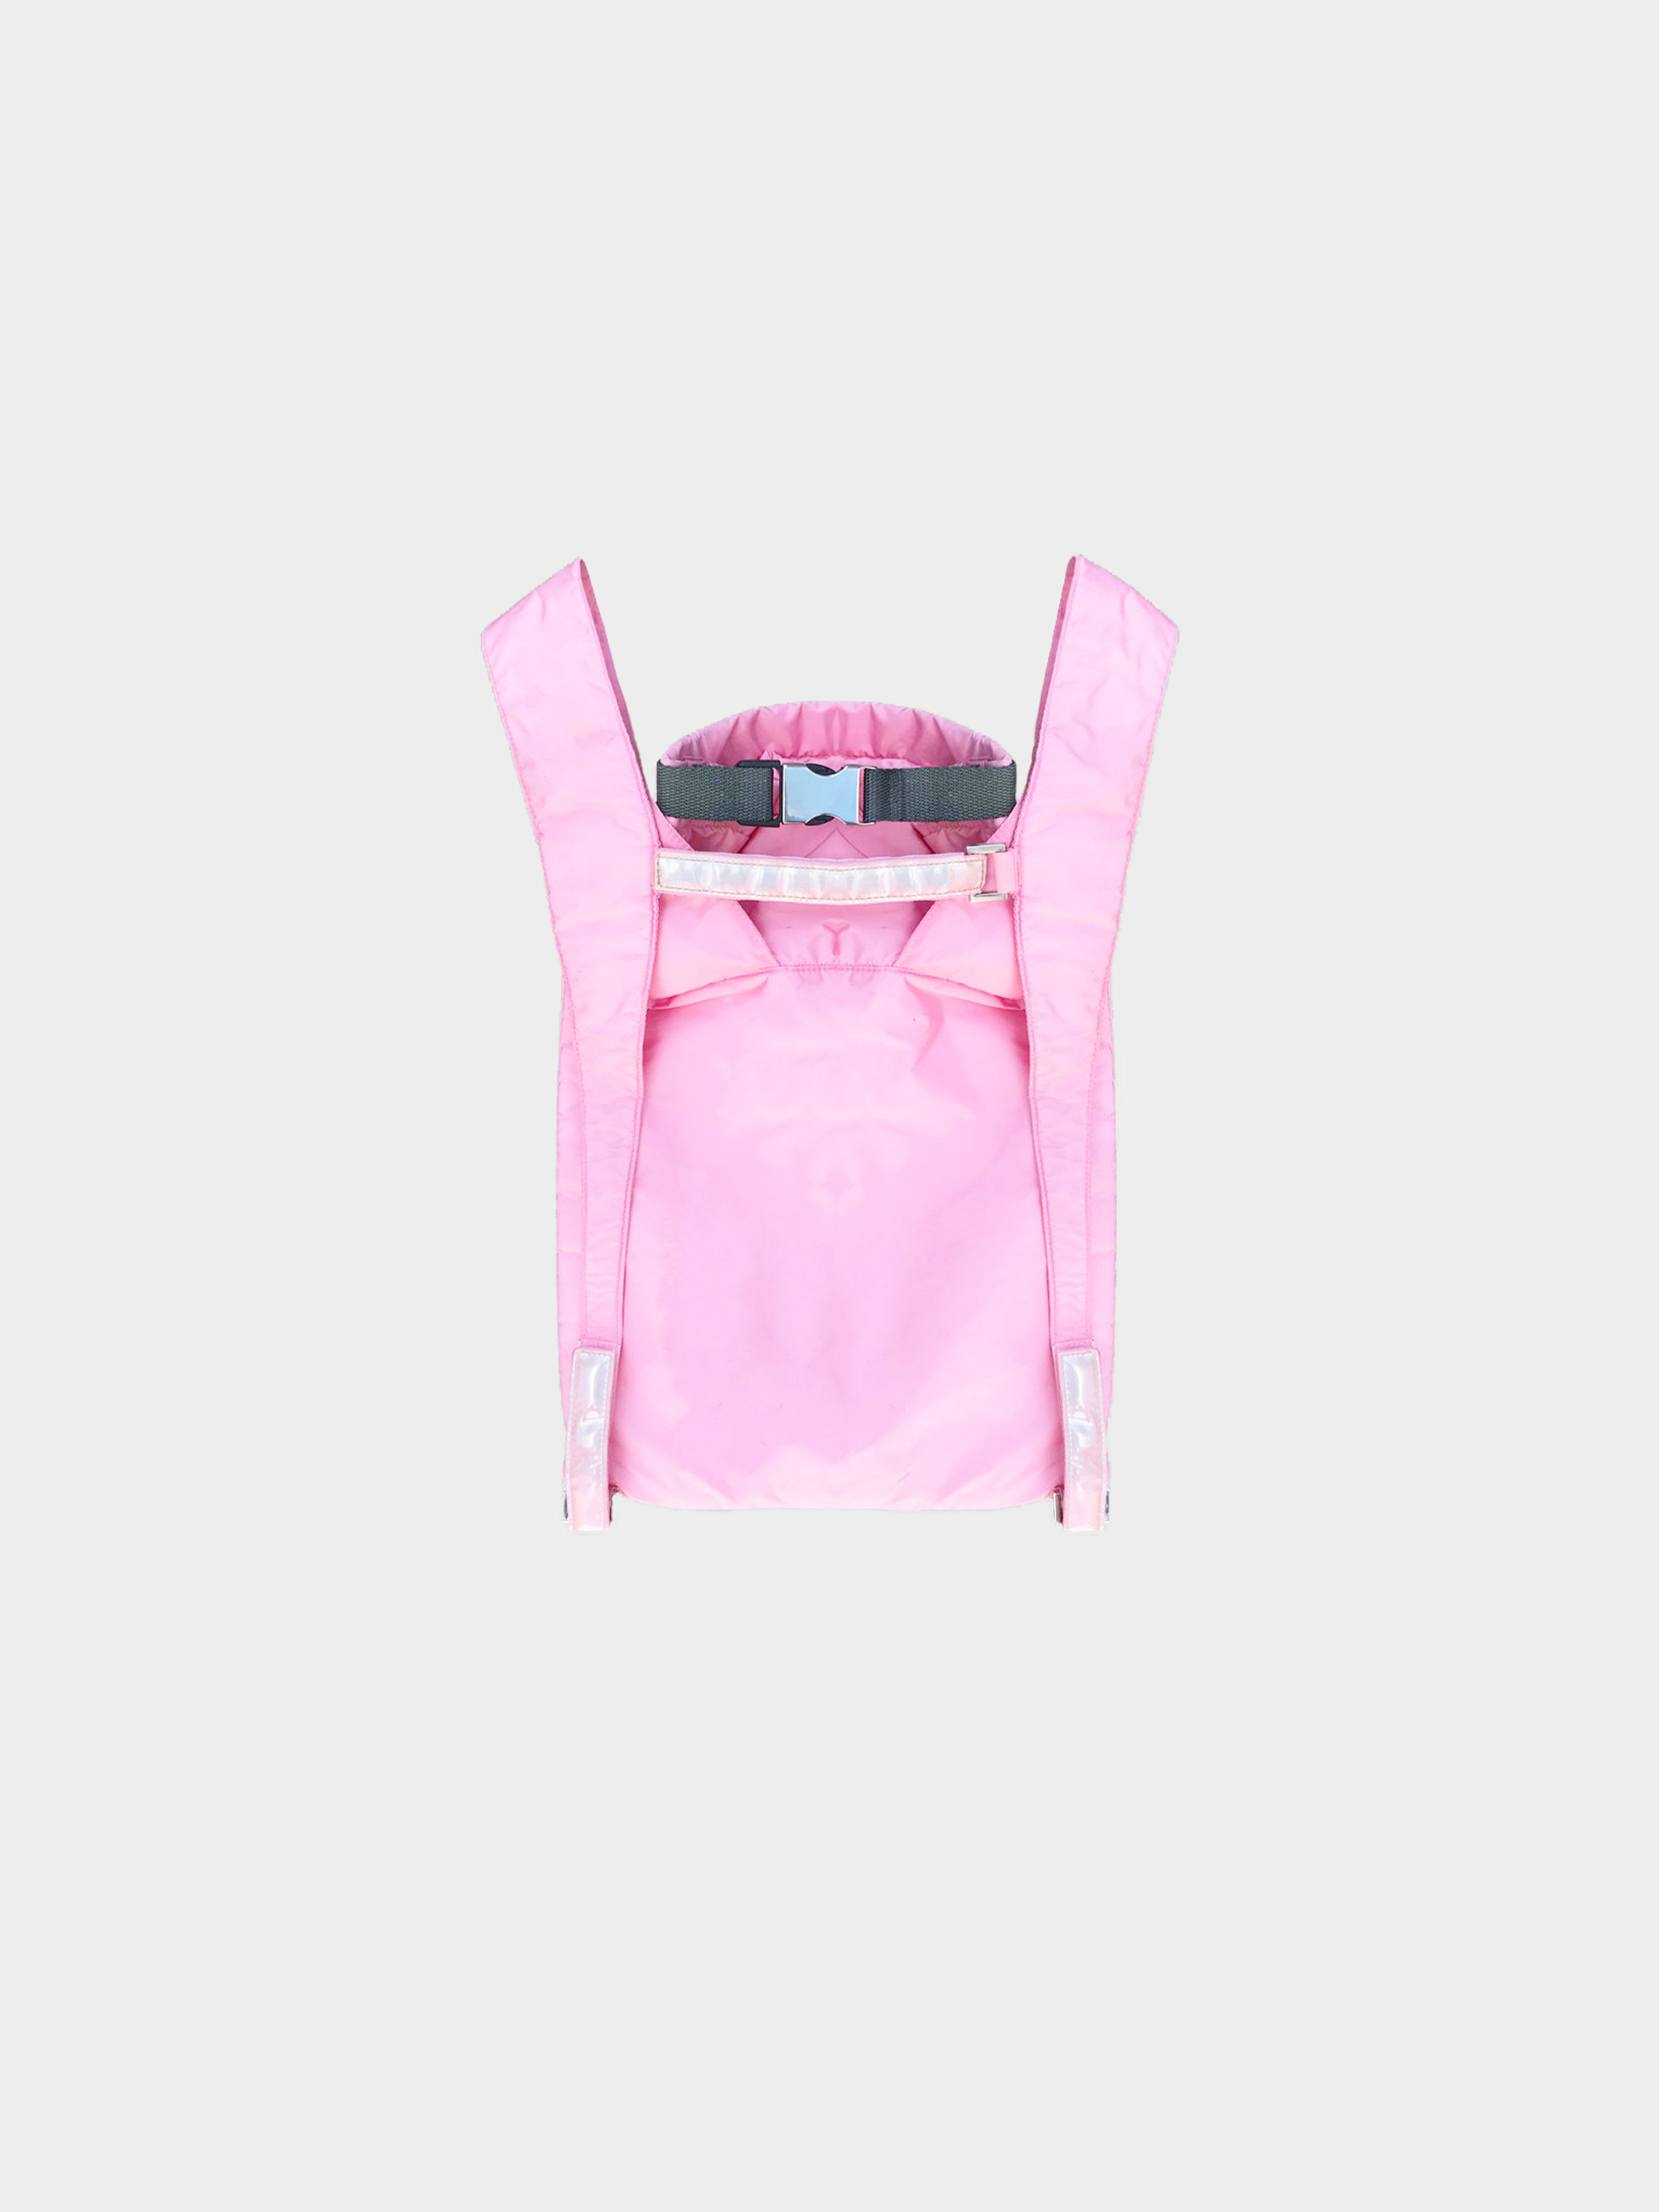 Prada SS 1999 Pink Tessuto Sport Rolltop Backpack